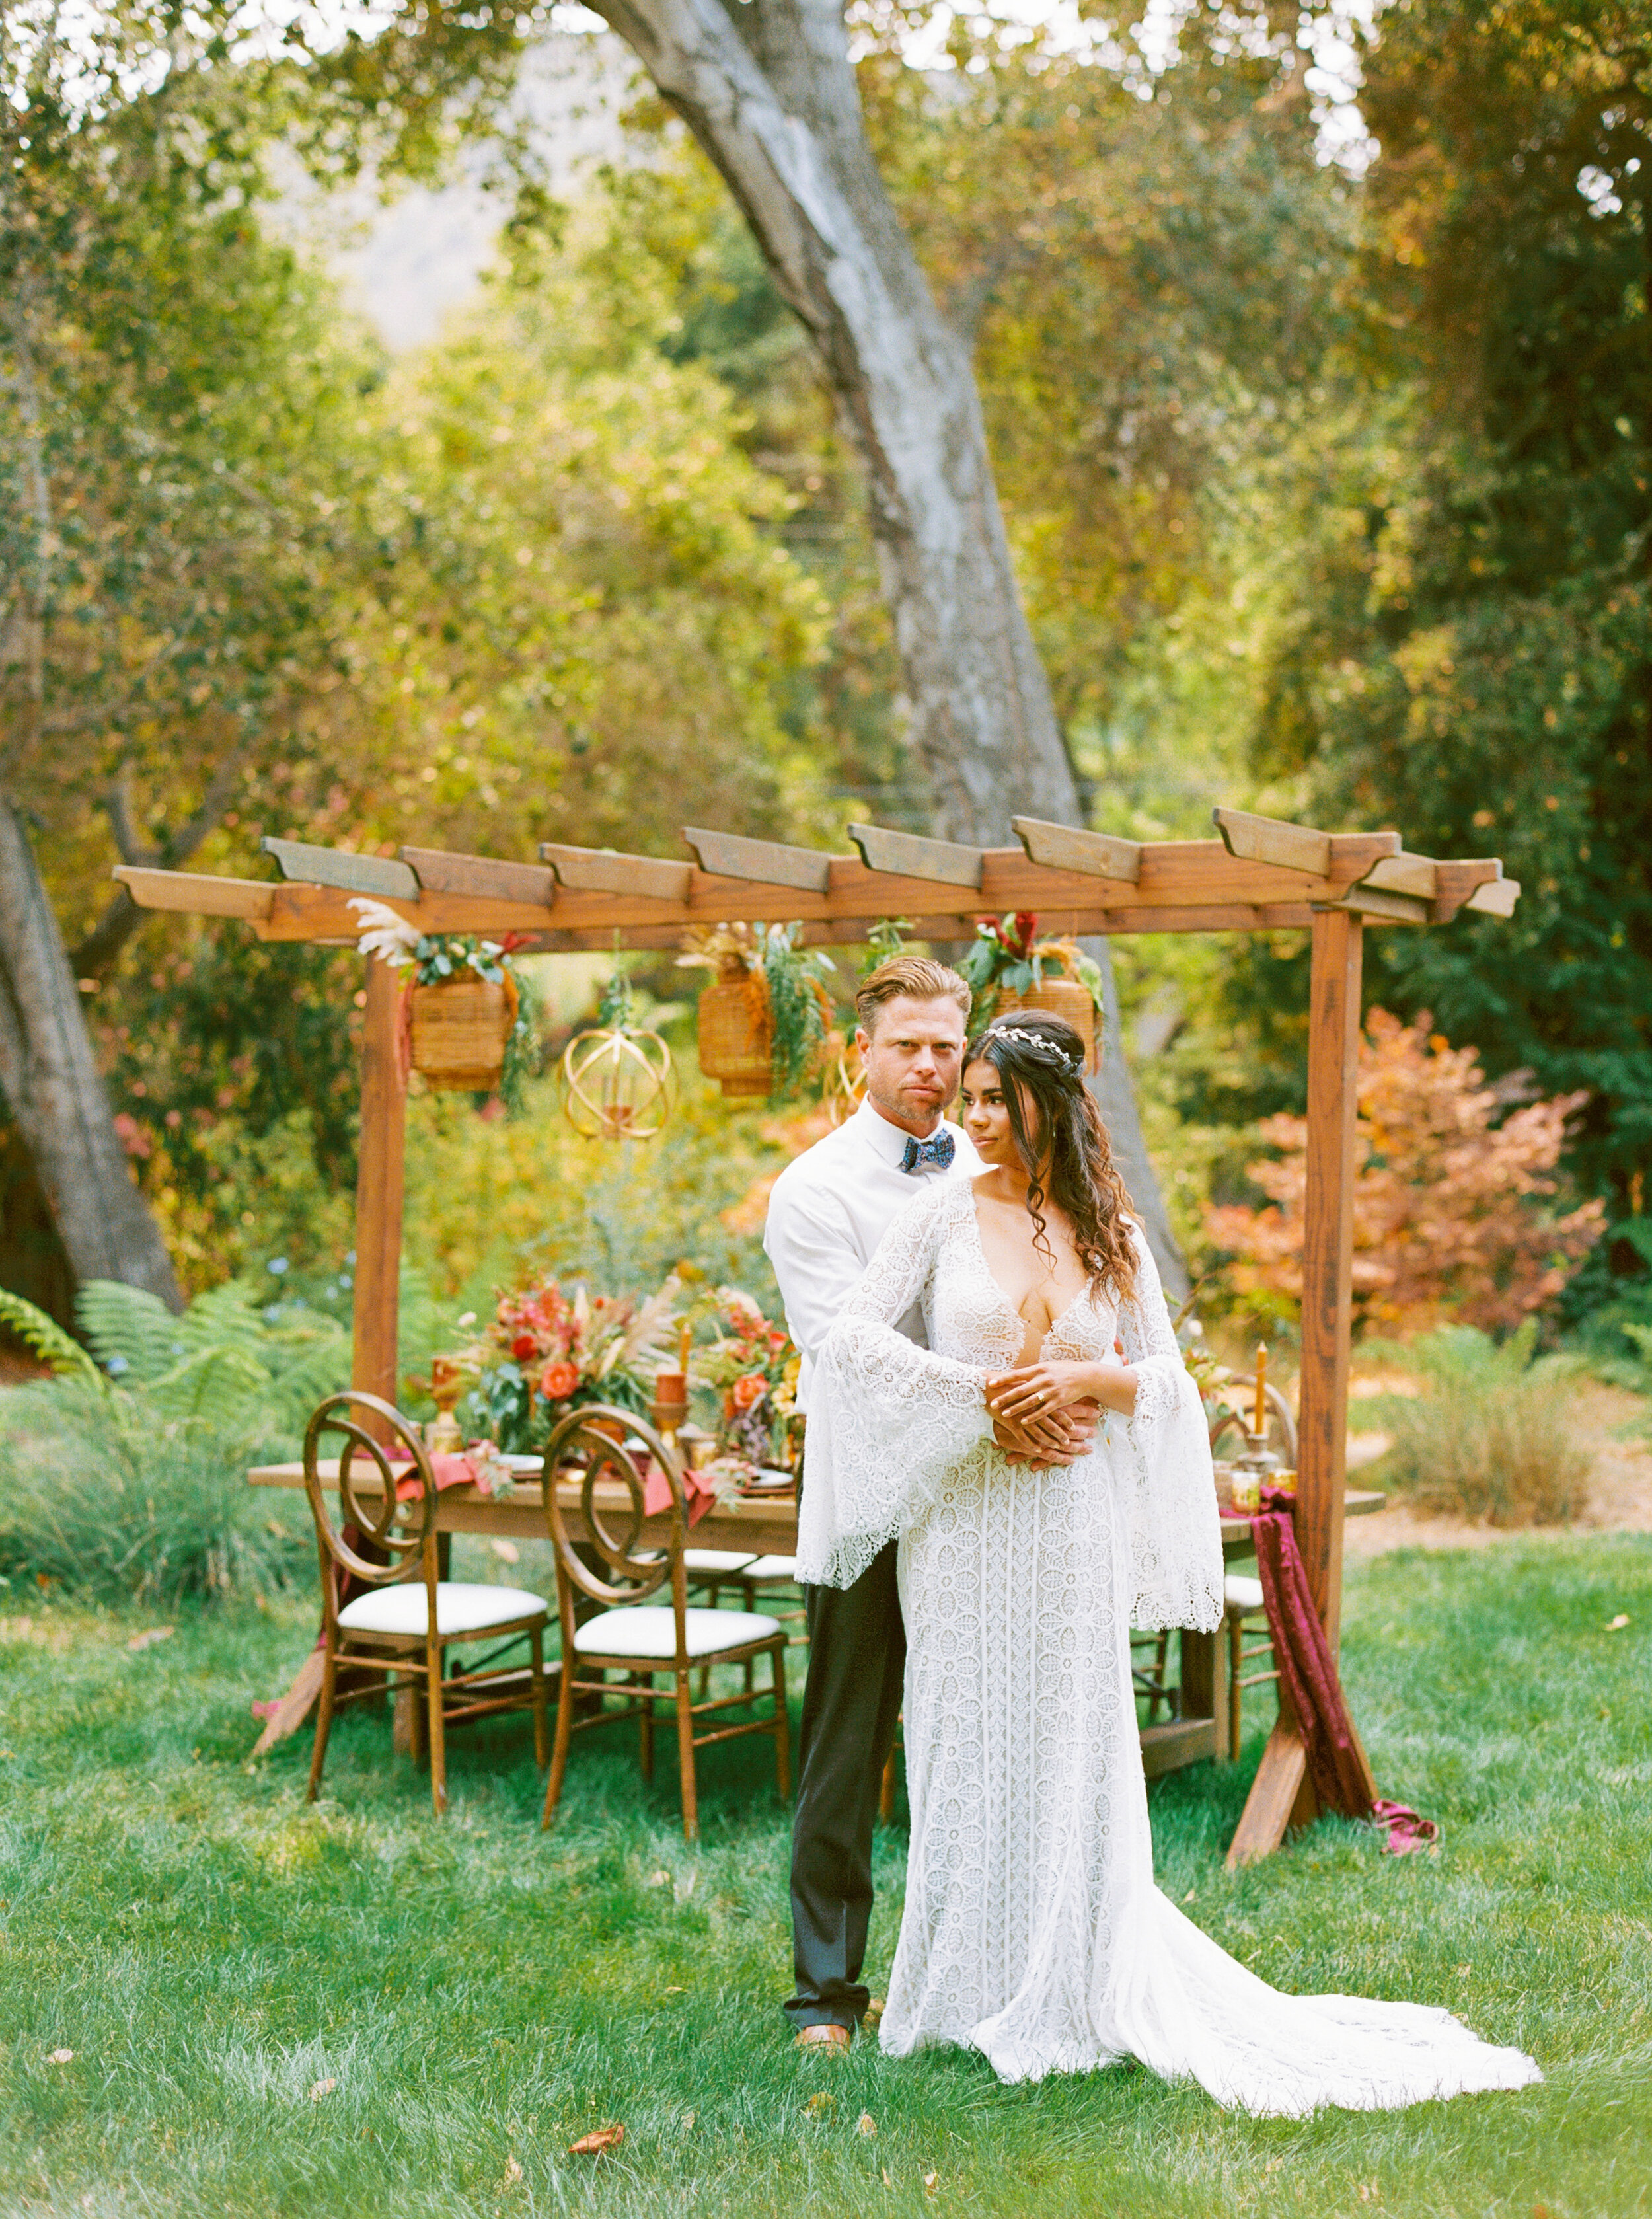 Sarahi Hadden - An Earthy Summer Boho Inspired Wedding with Sunset Hues at Gardener Ranch-112.jpg